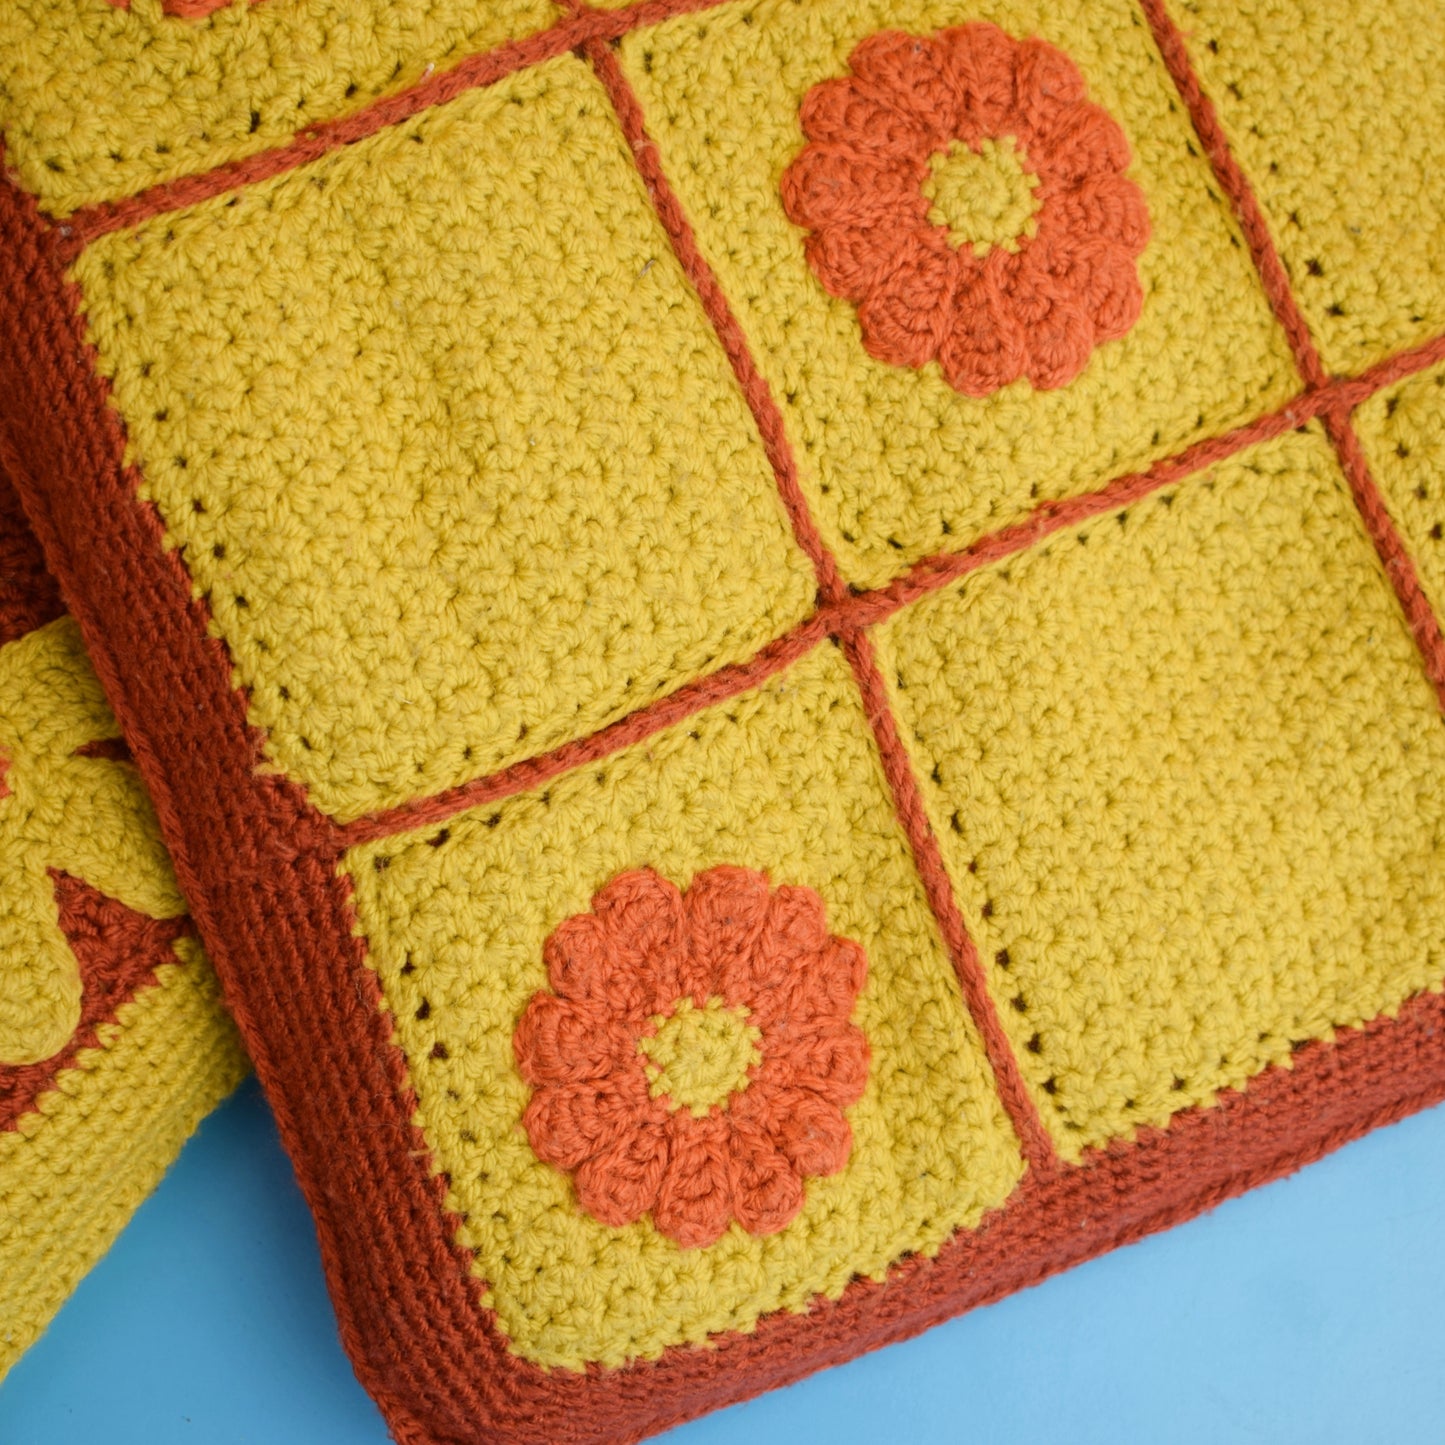 Vintage 1970s Crochet Cushions - Mustard